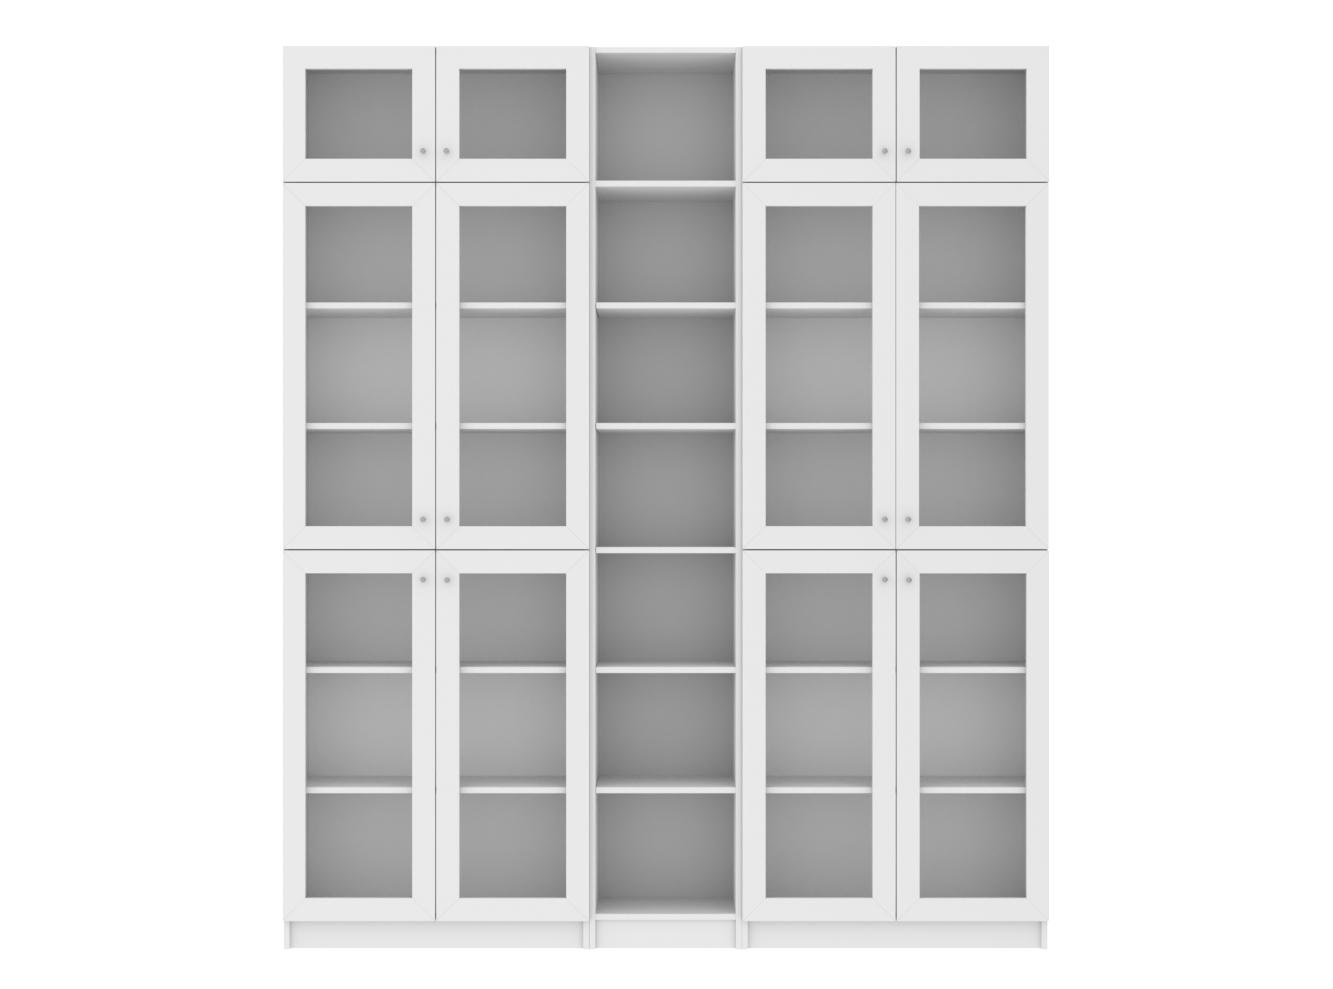 Книжный шкаф Билли 398 white ИКЕА (IKEA) изображение товара